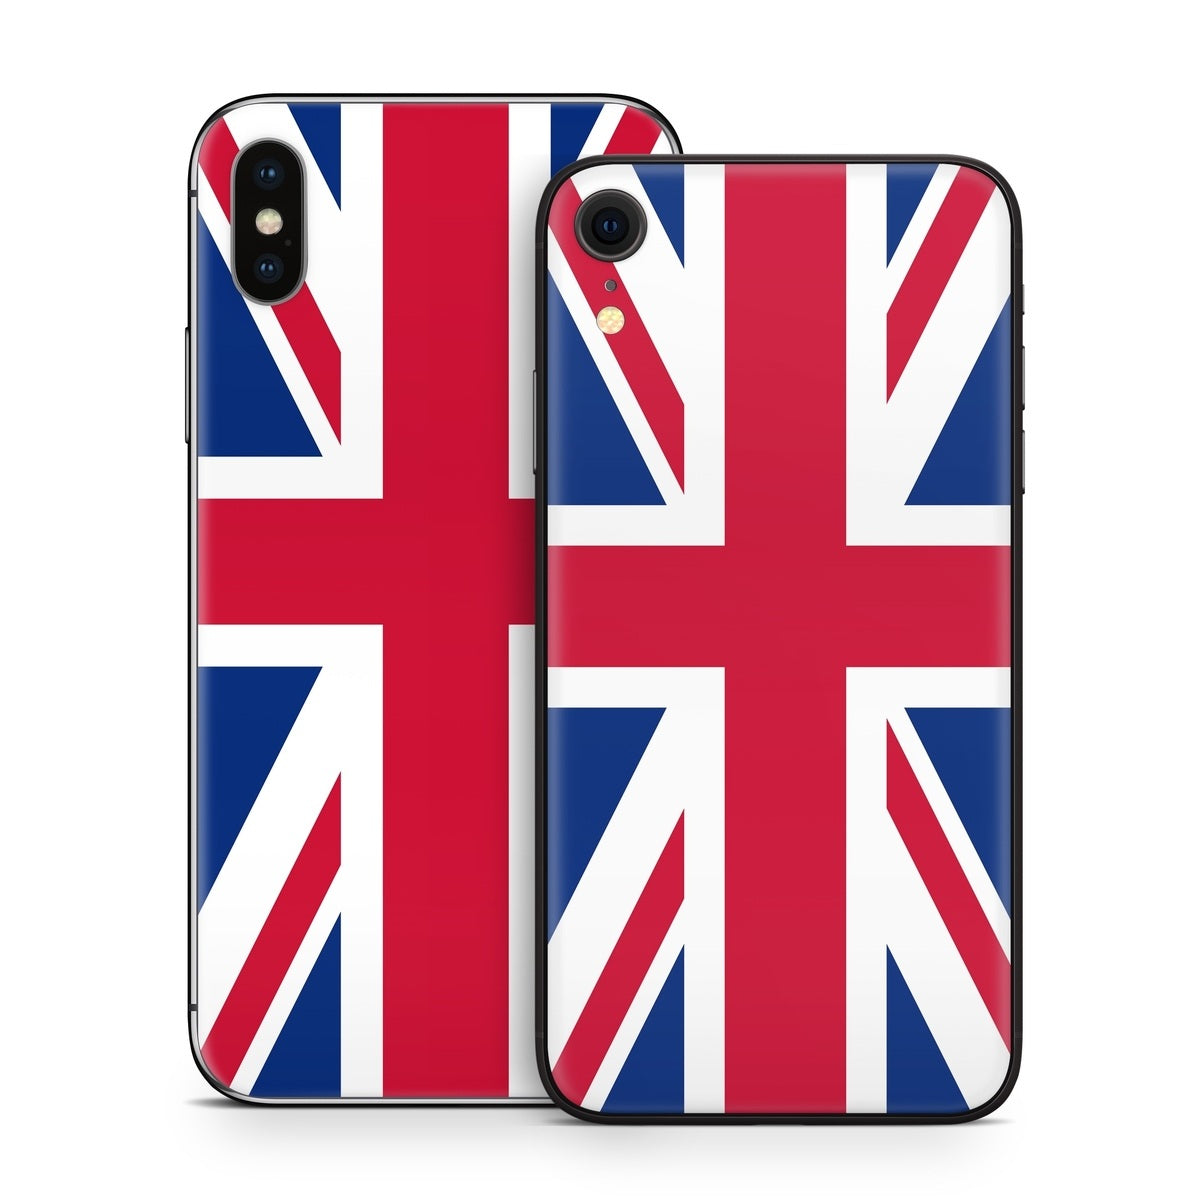 Union Jack - Apple iPhone X Skin